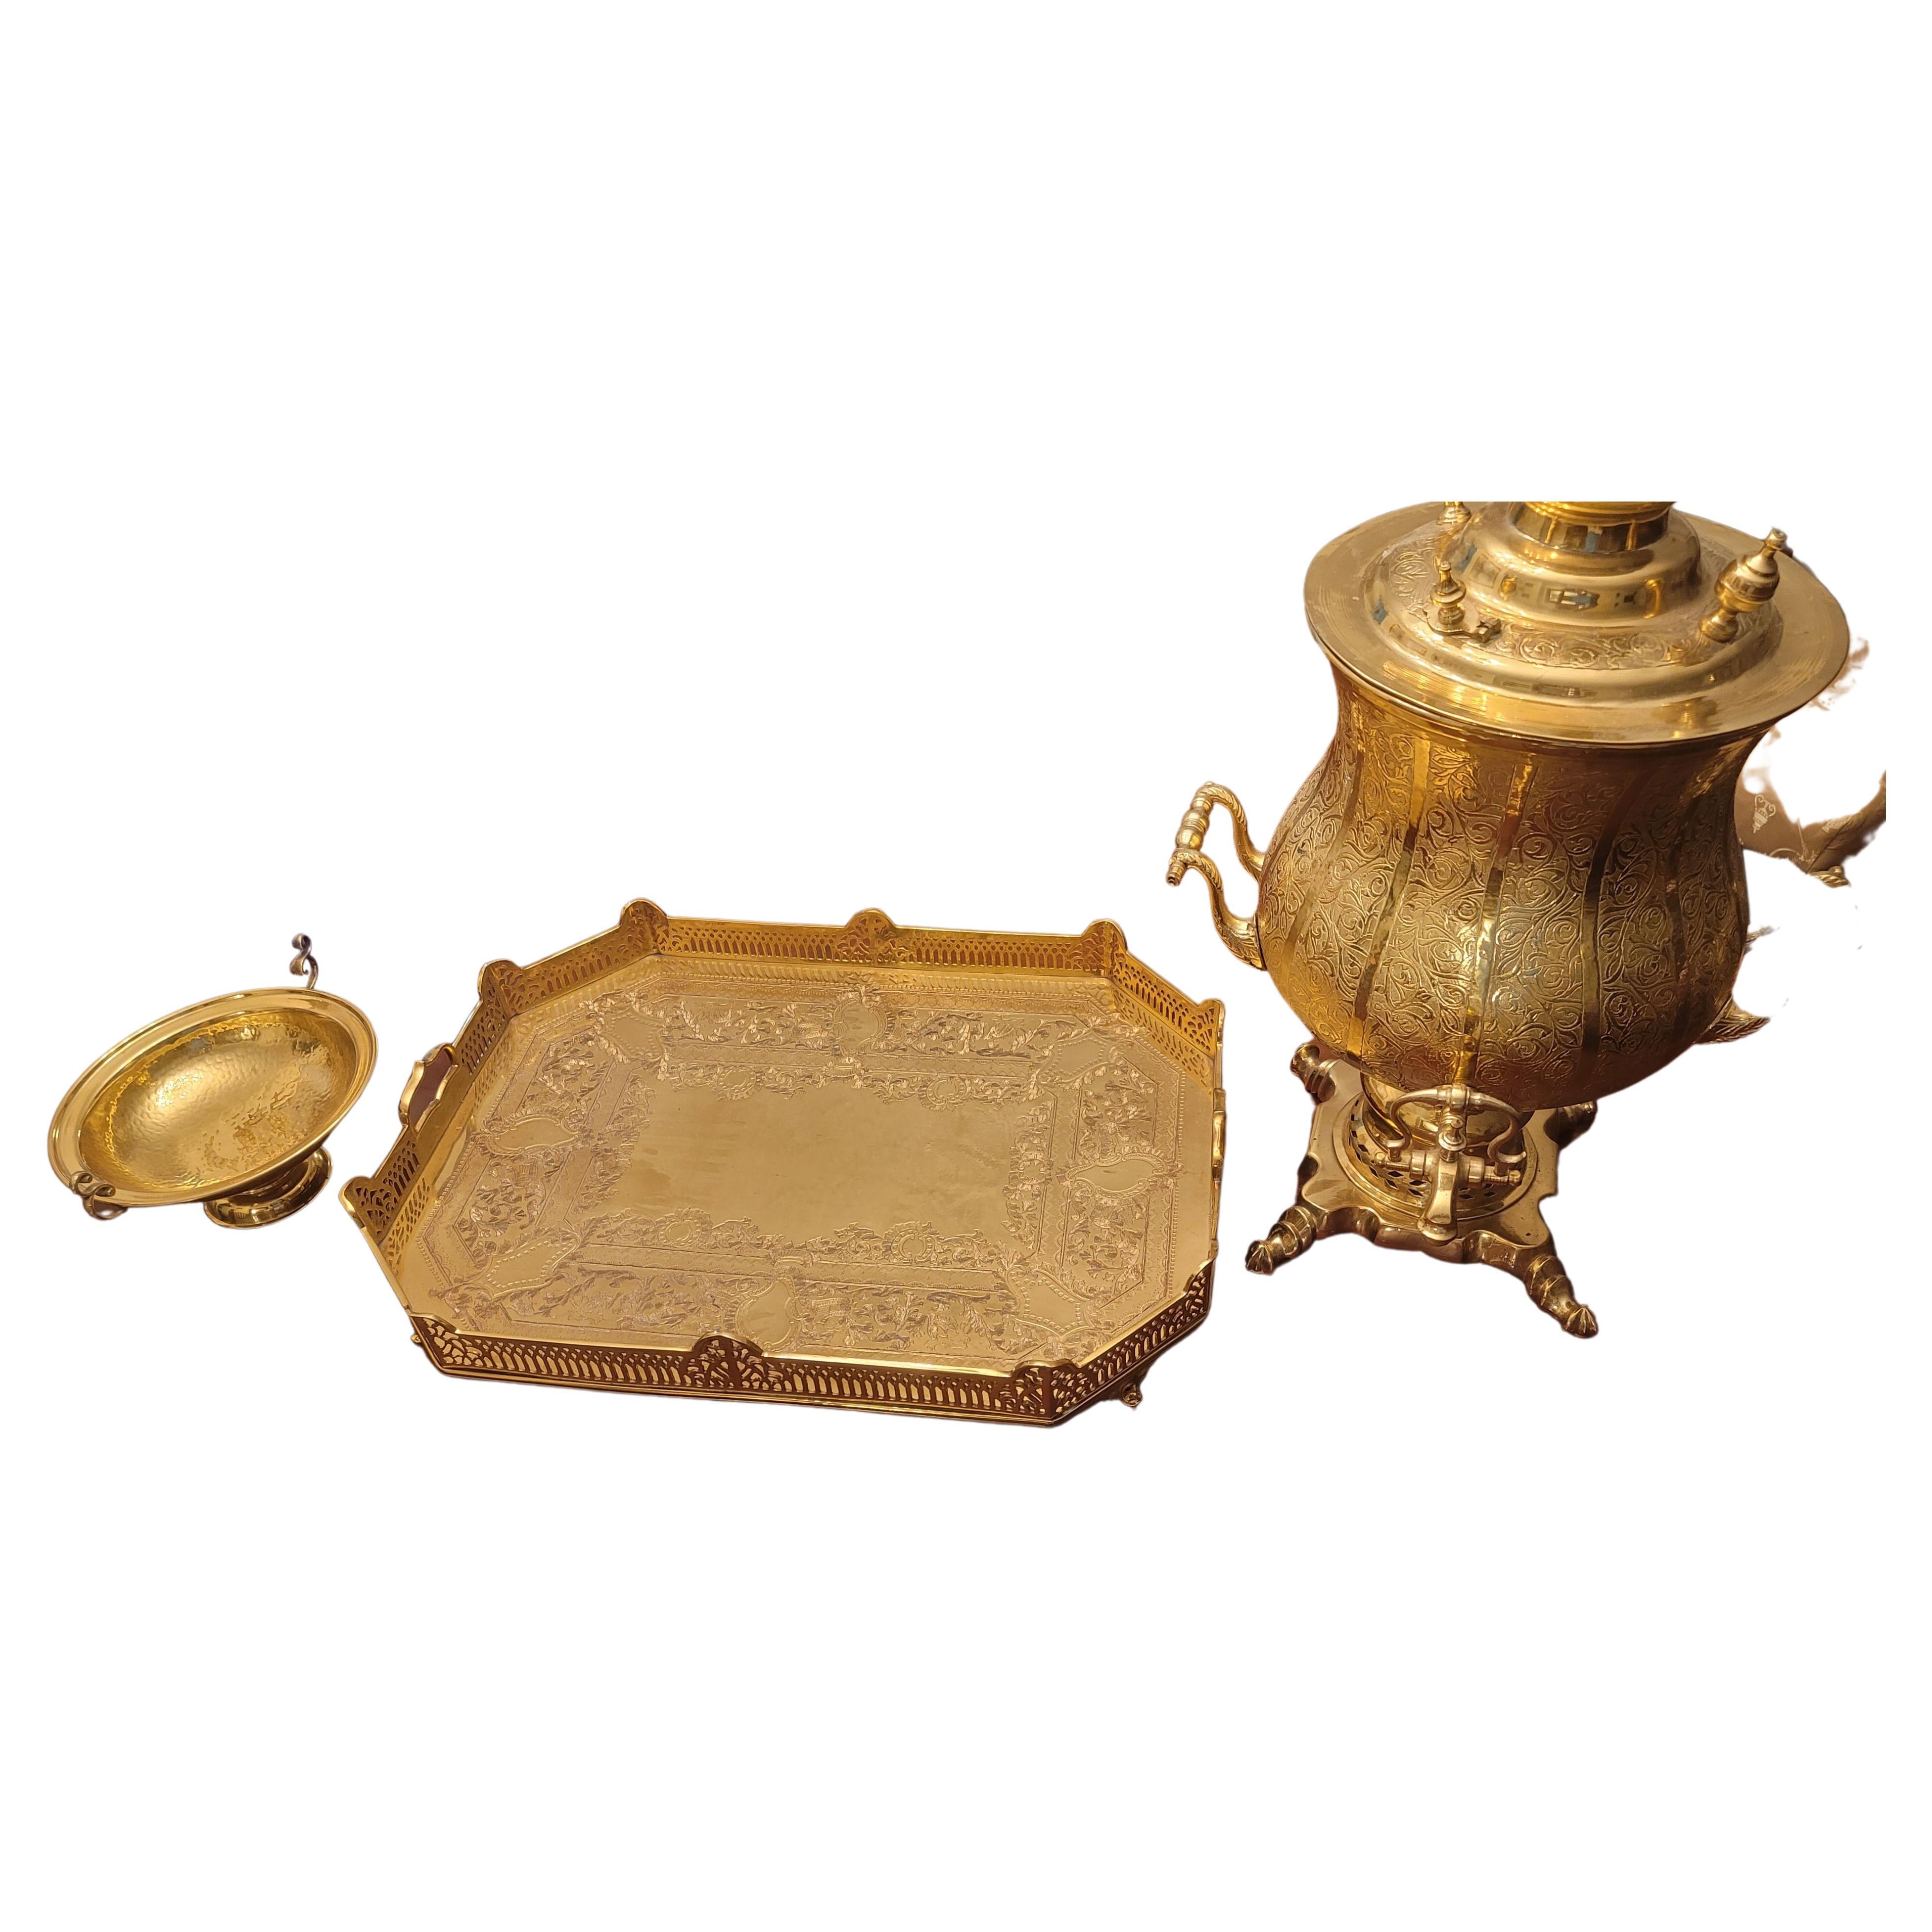 20th Century Large Ornate Engraved and Polished Brass Decorative Samovar Set For Sale